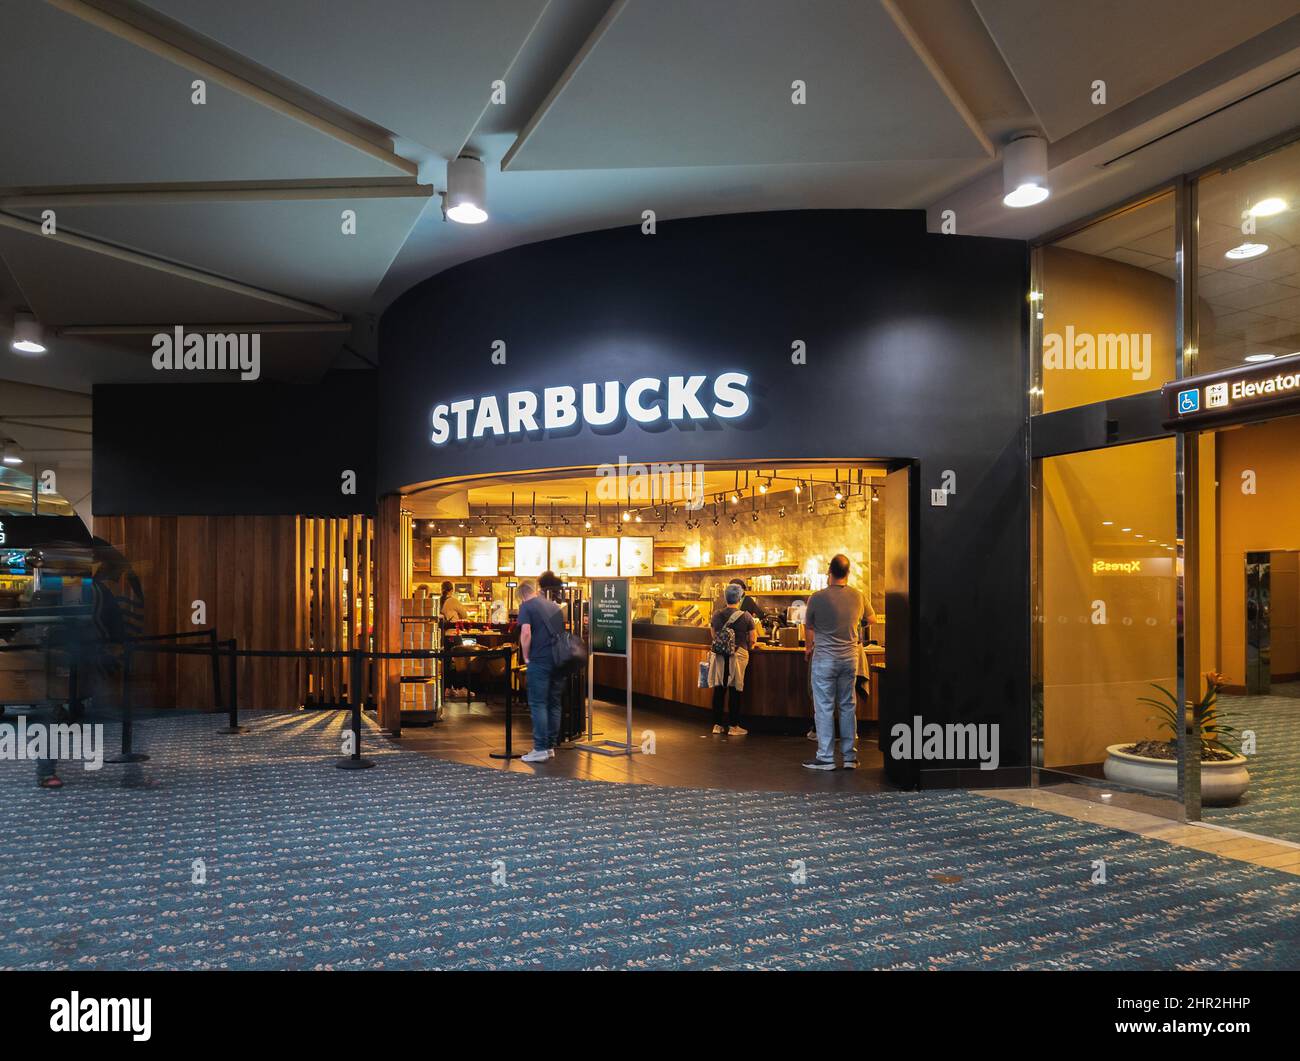 Orlando, Florida - February 4, 2022: Long Exposure View of Starbucks Coffee Shop inside Terminal B of Orlando International Airport. Stock Photo